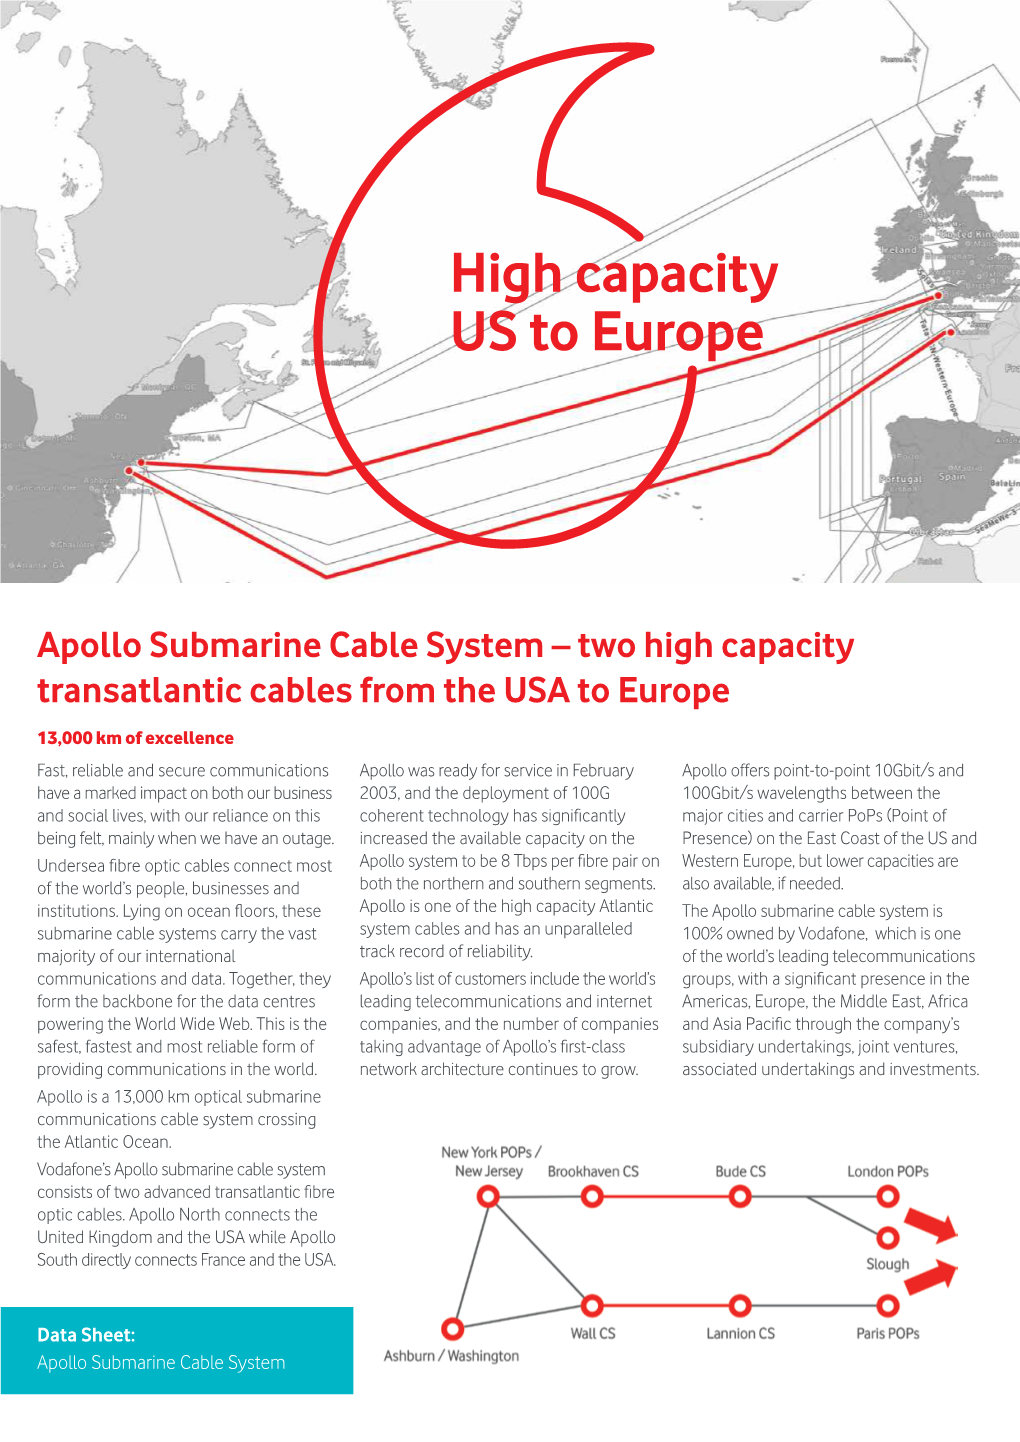 High Capacity US to Europe